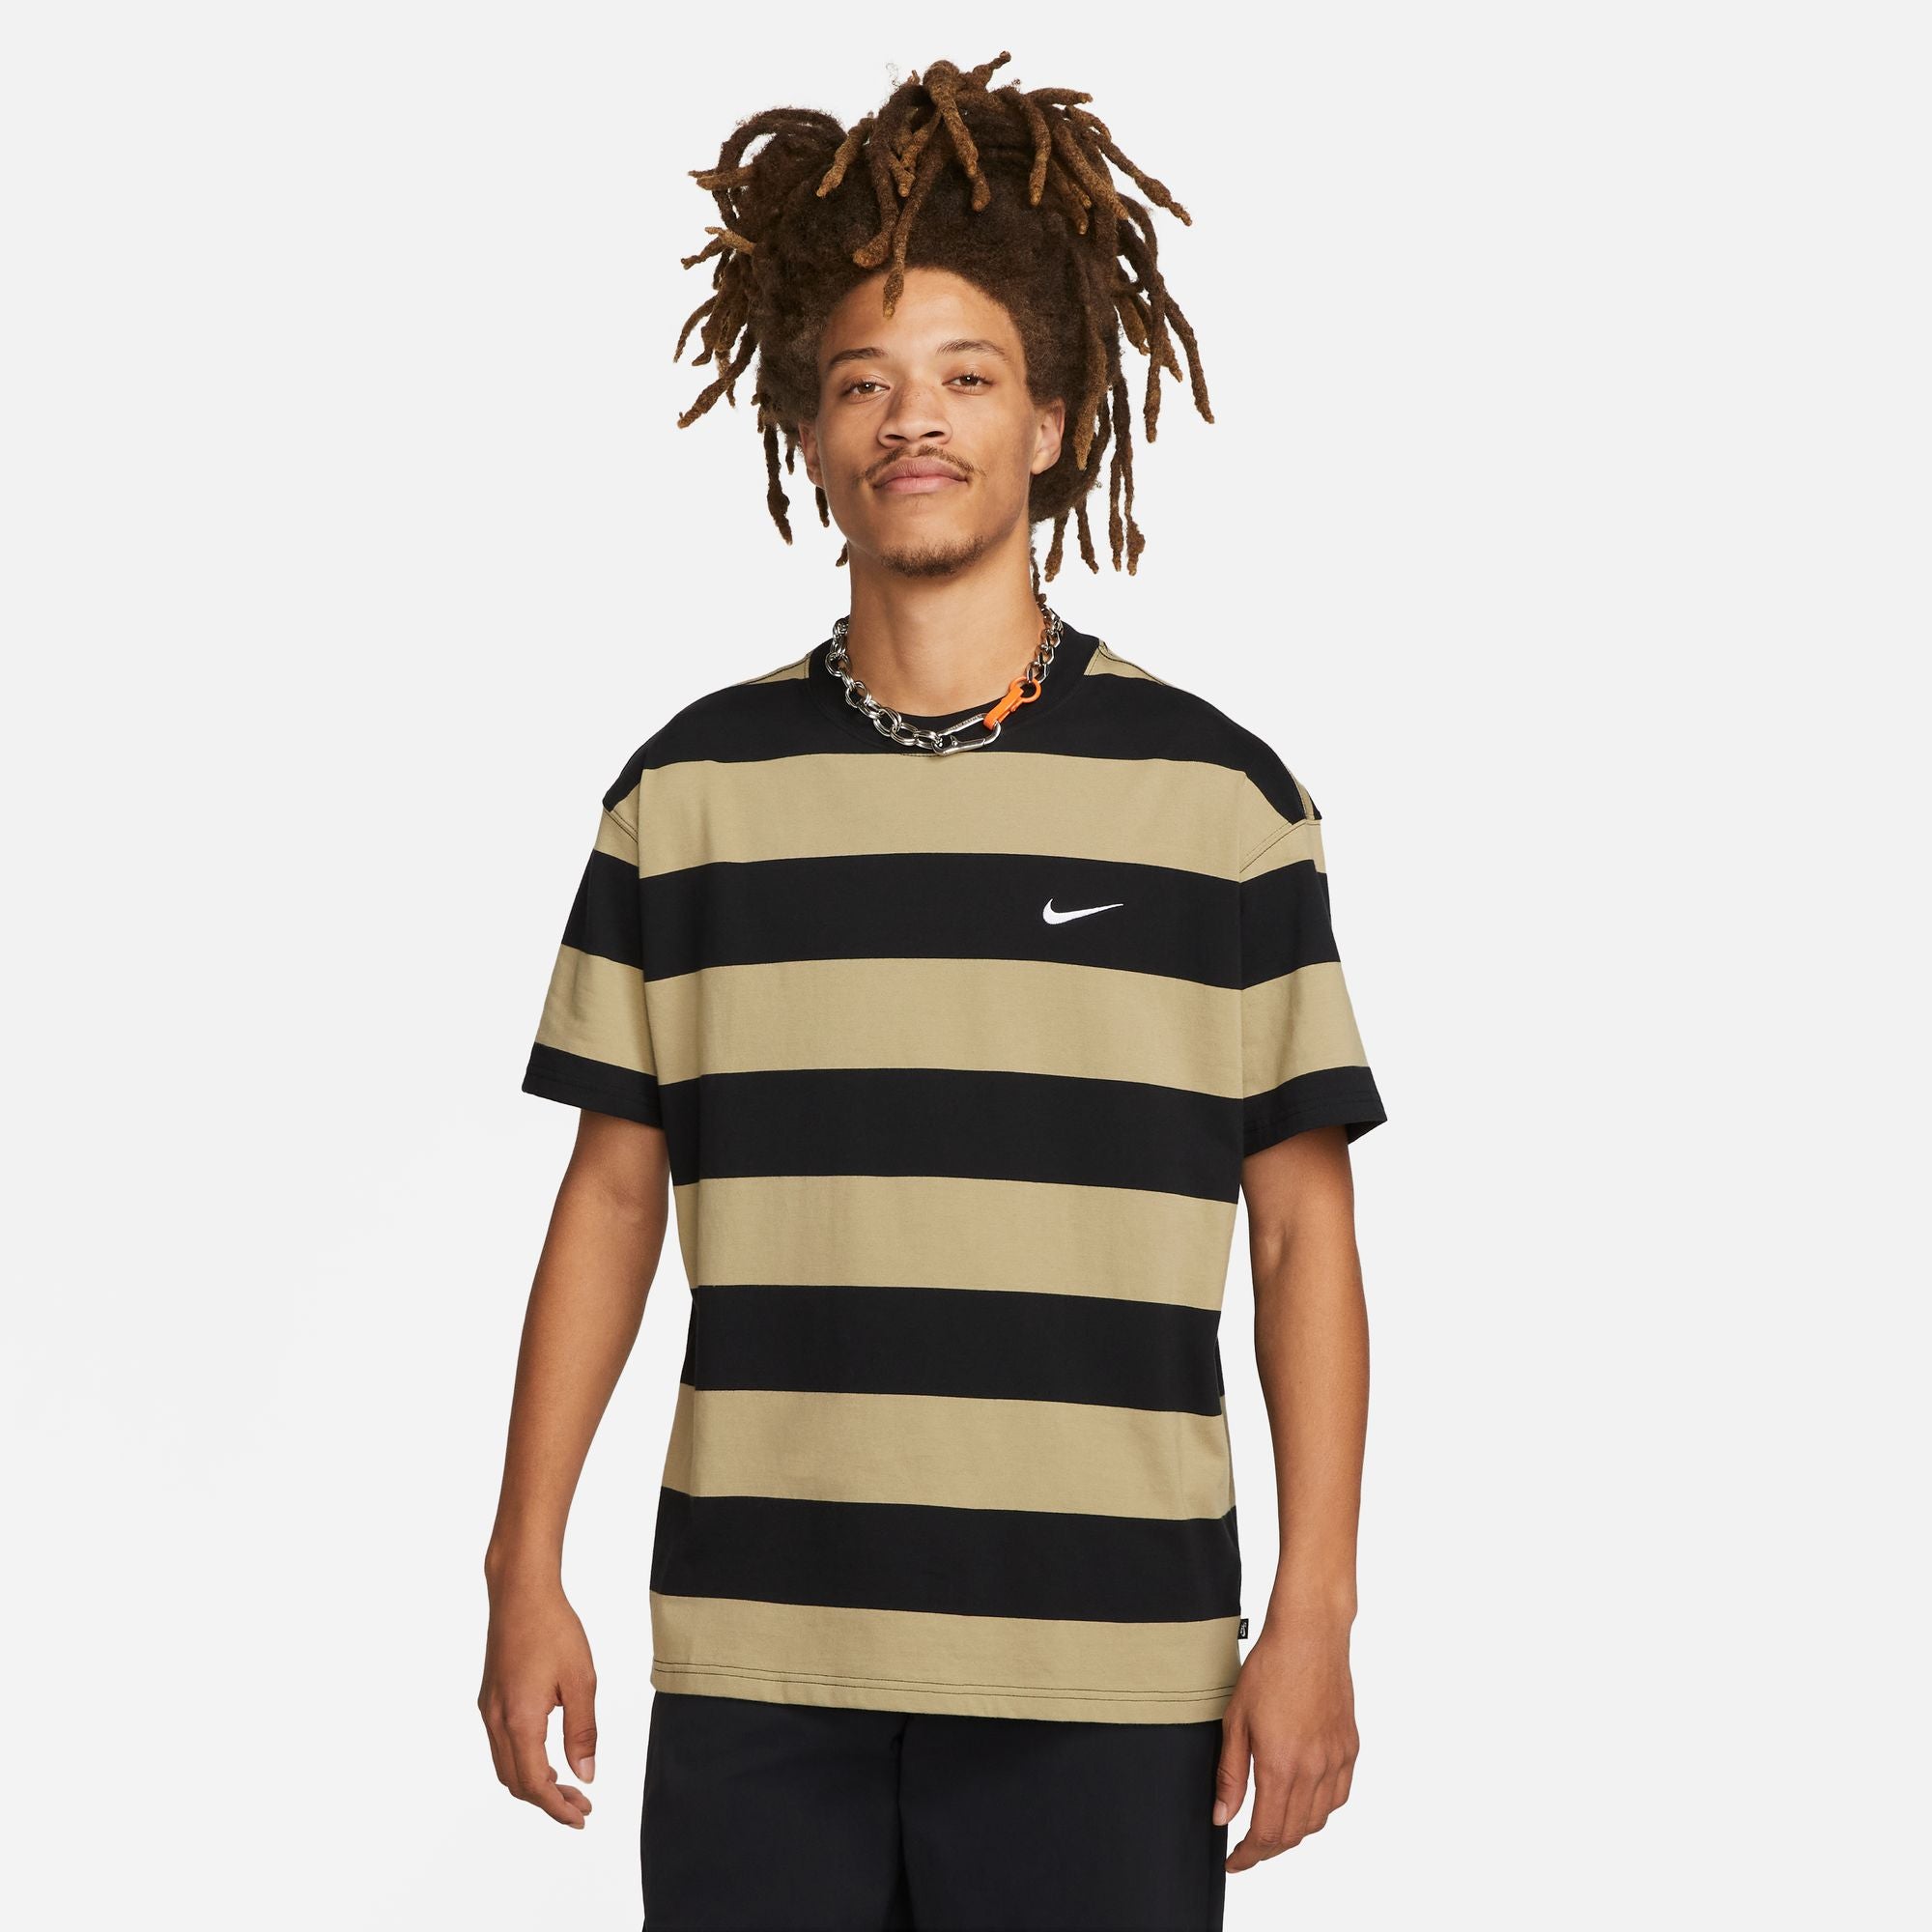 Neutral Olive Striped Nike SB T-Shirt